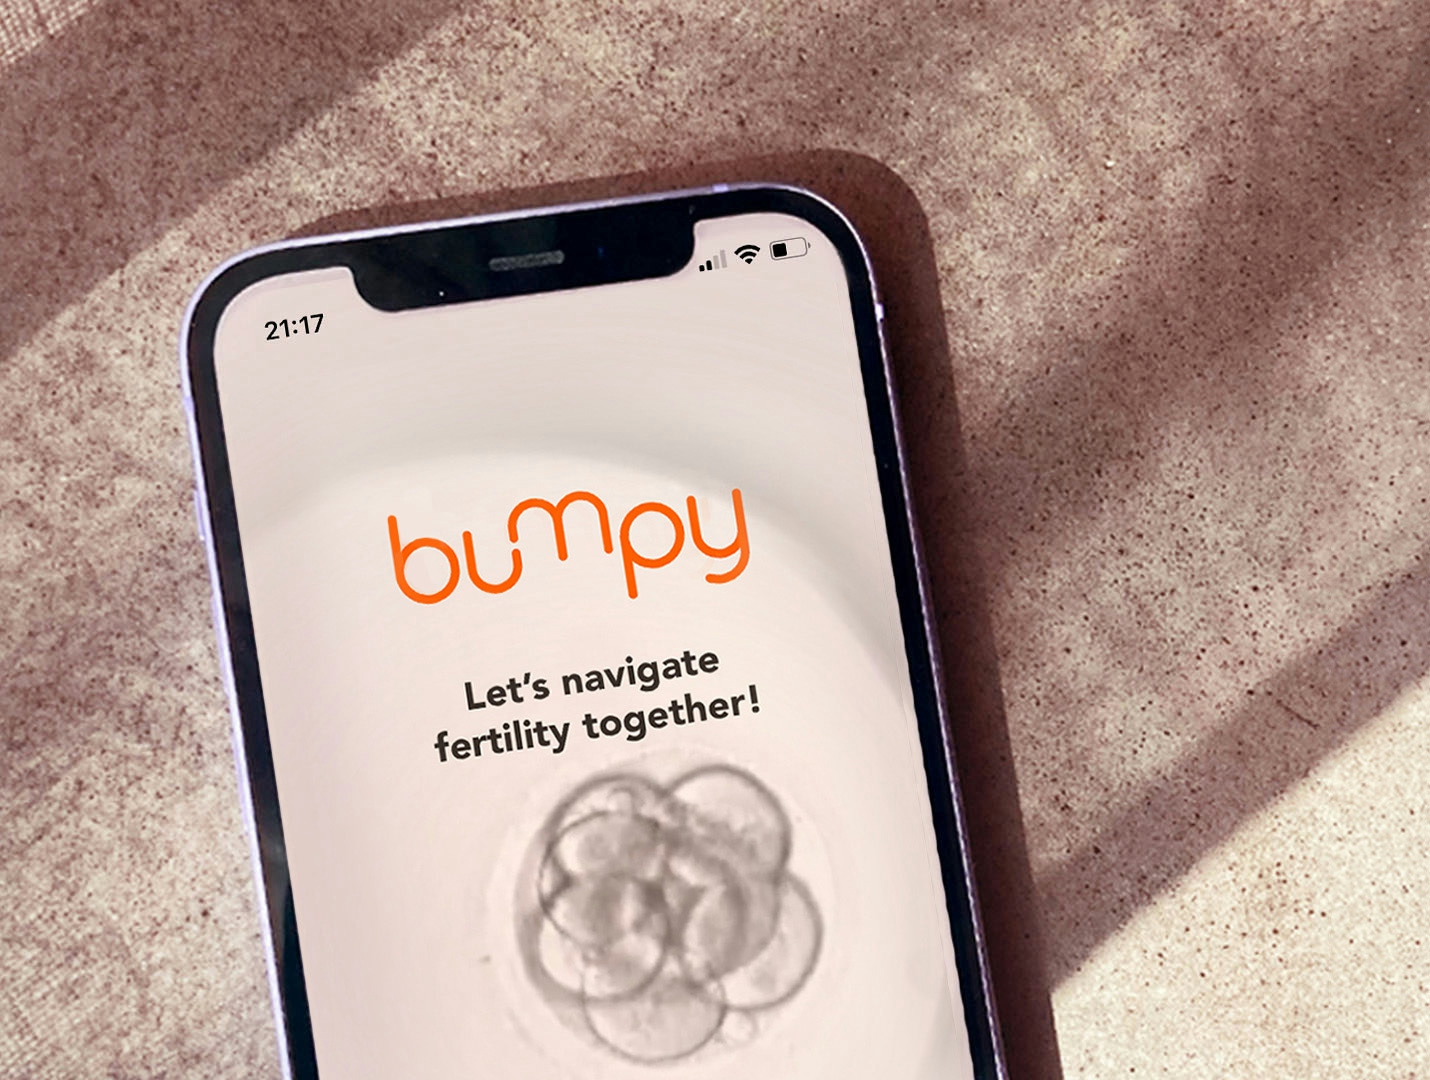 bumpy-webportal